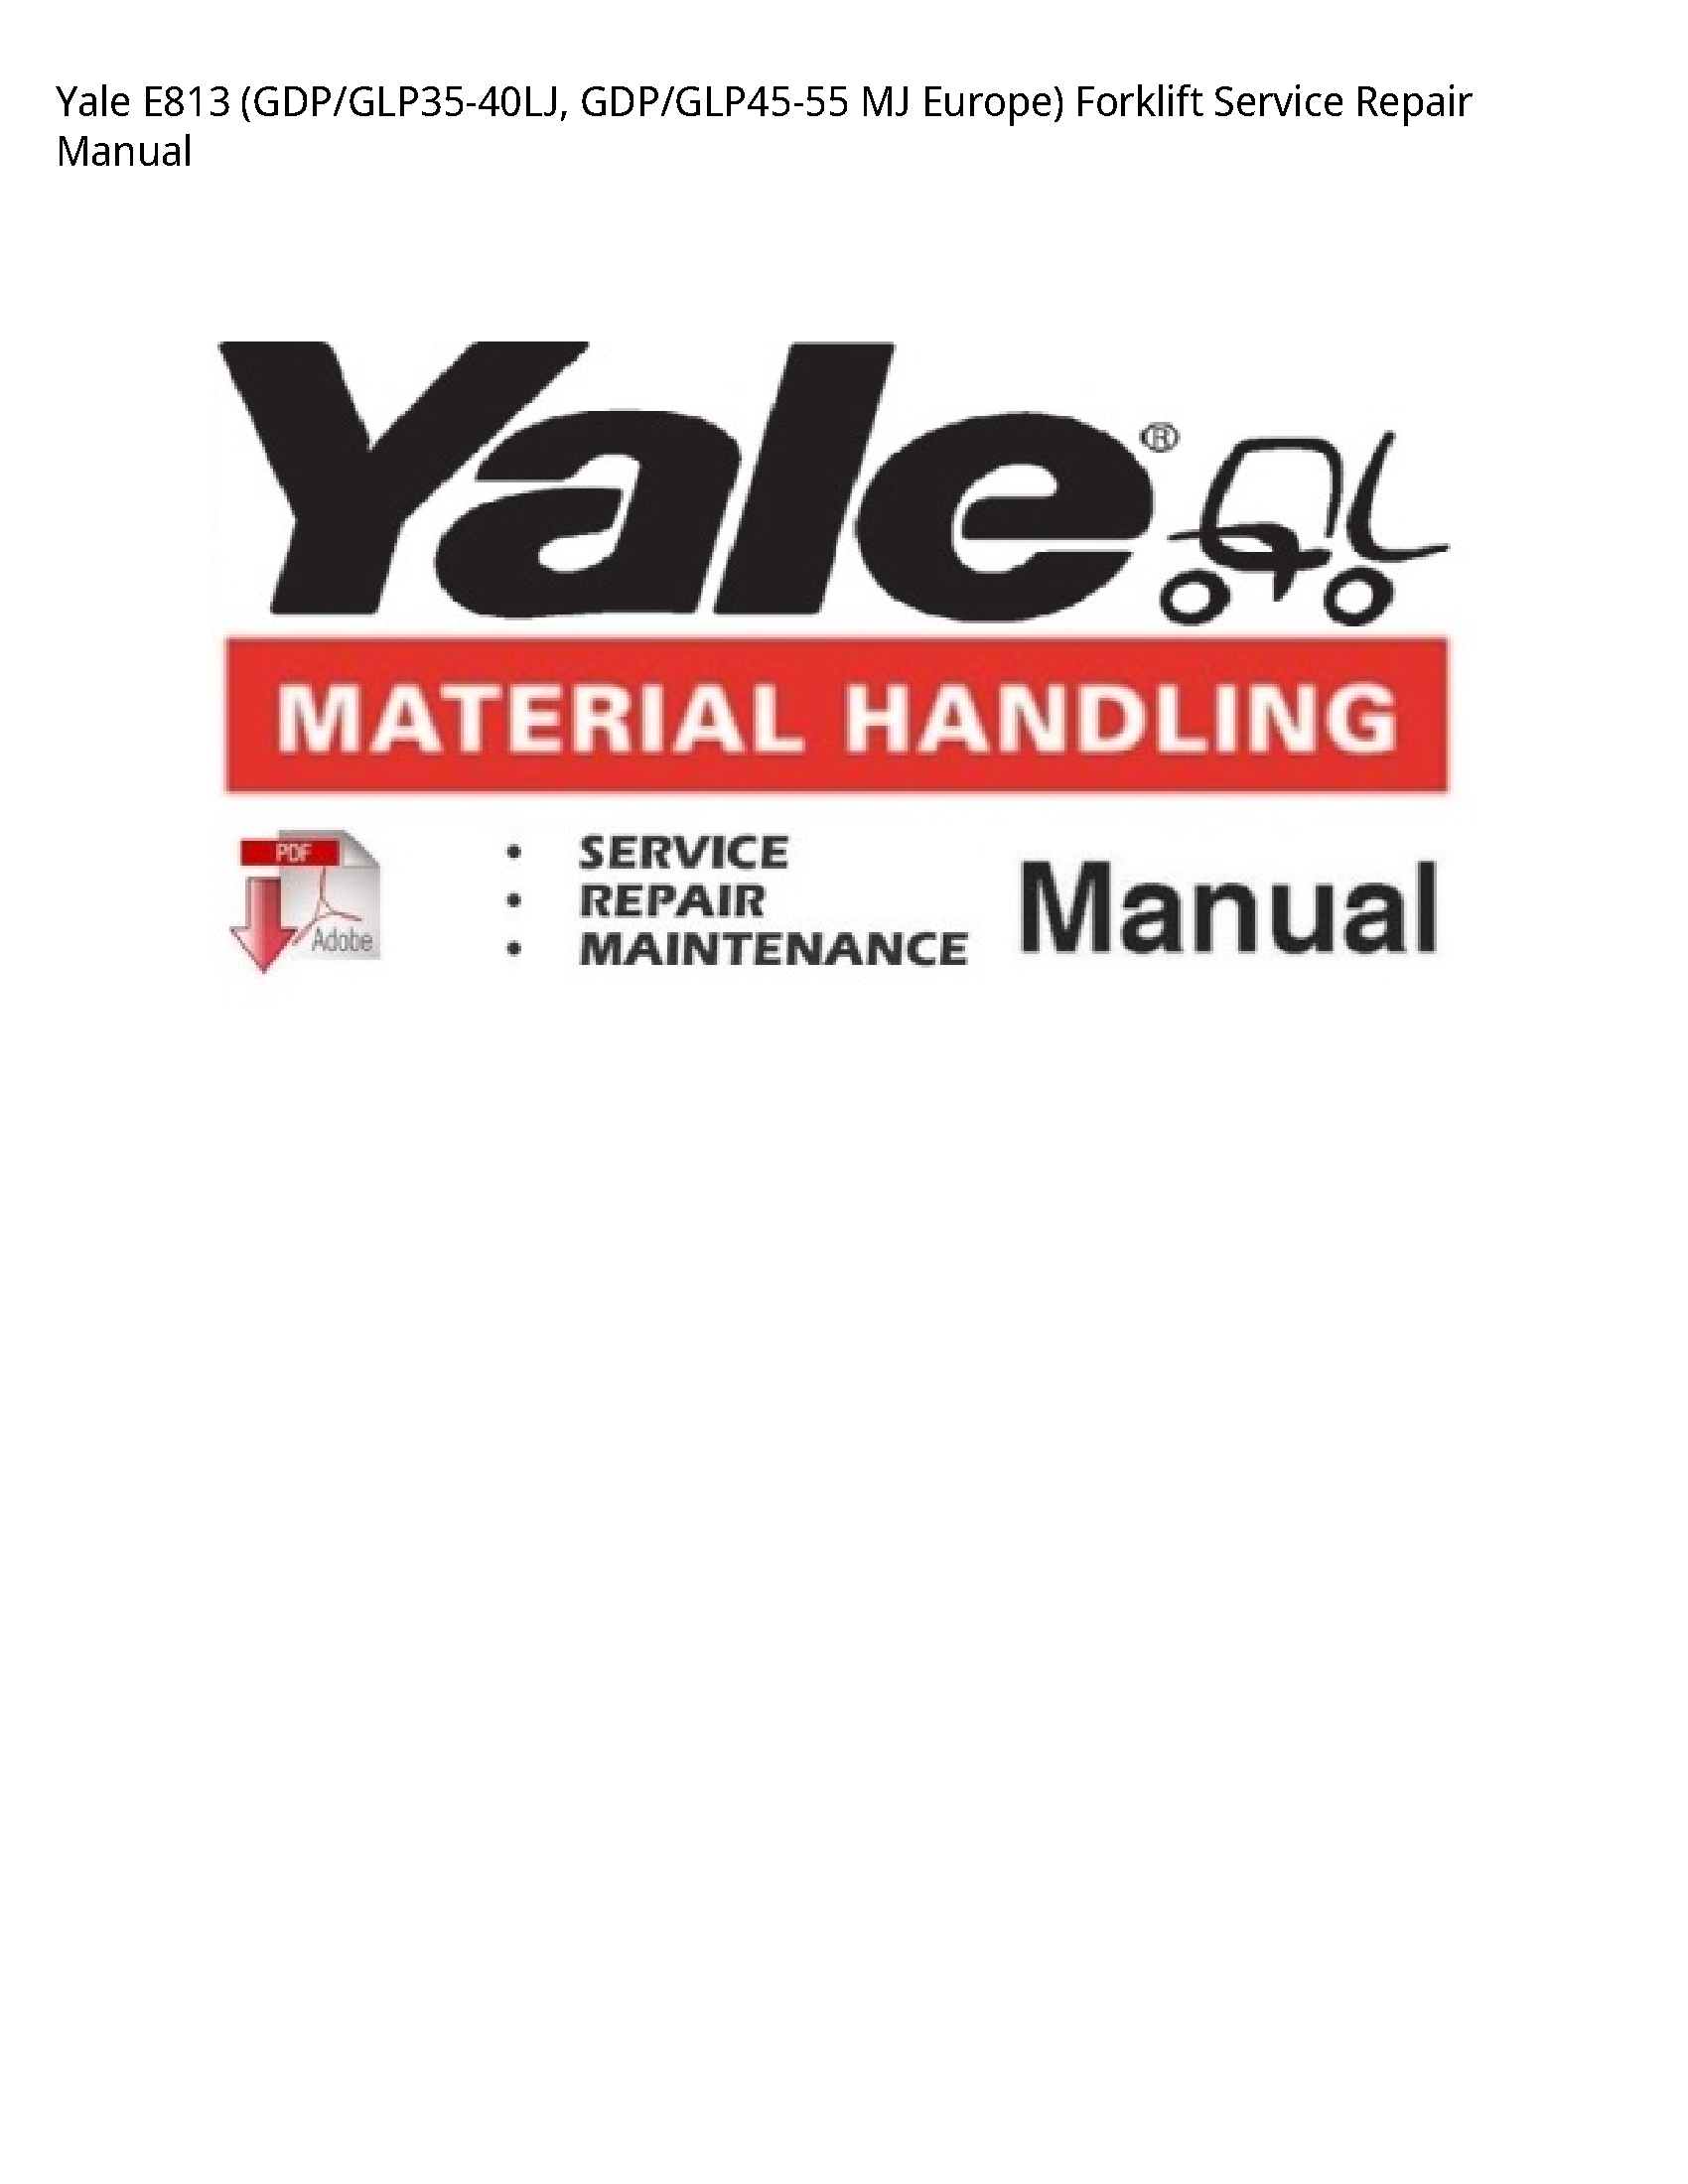 Yale E813 MJ Europe) Forklift manual